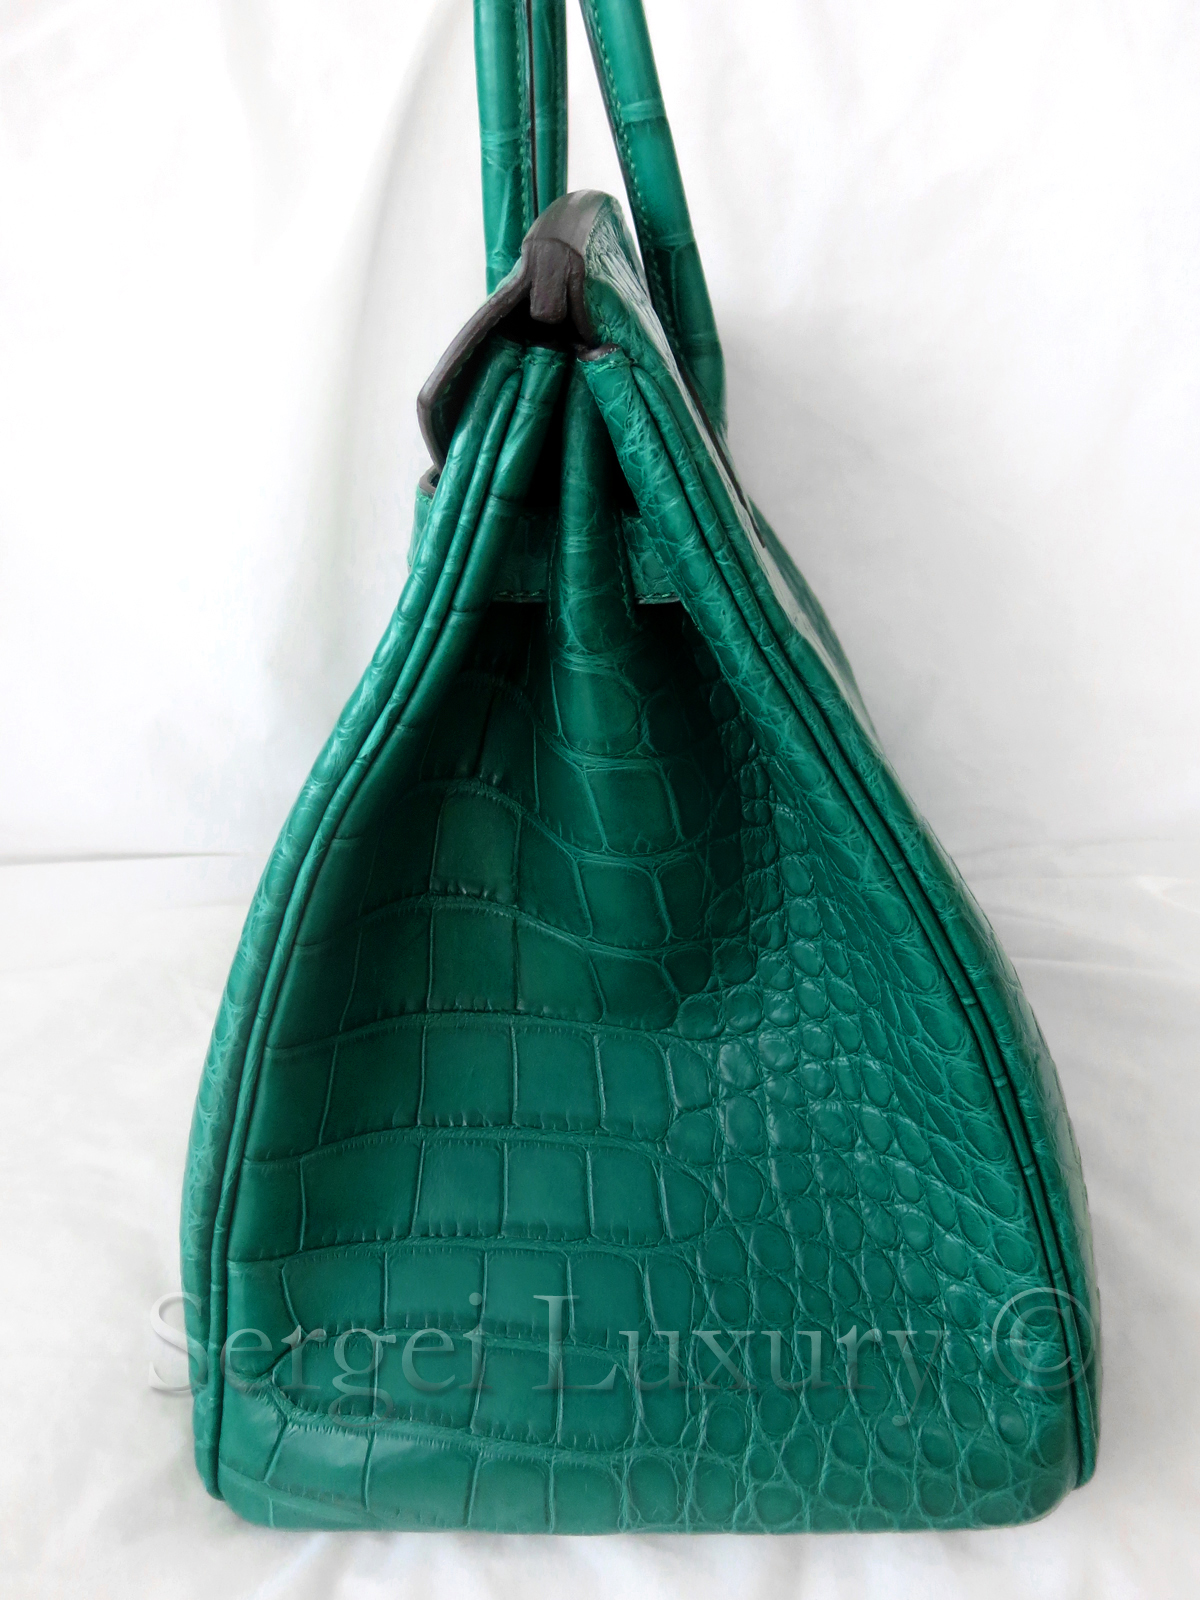 Hermès Green Shiny Porosus Crocodile Birkin